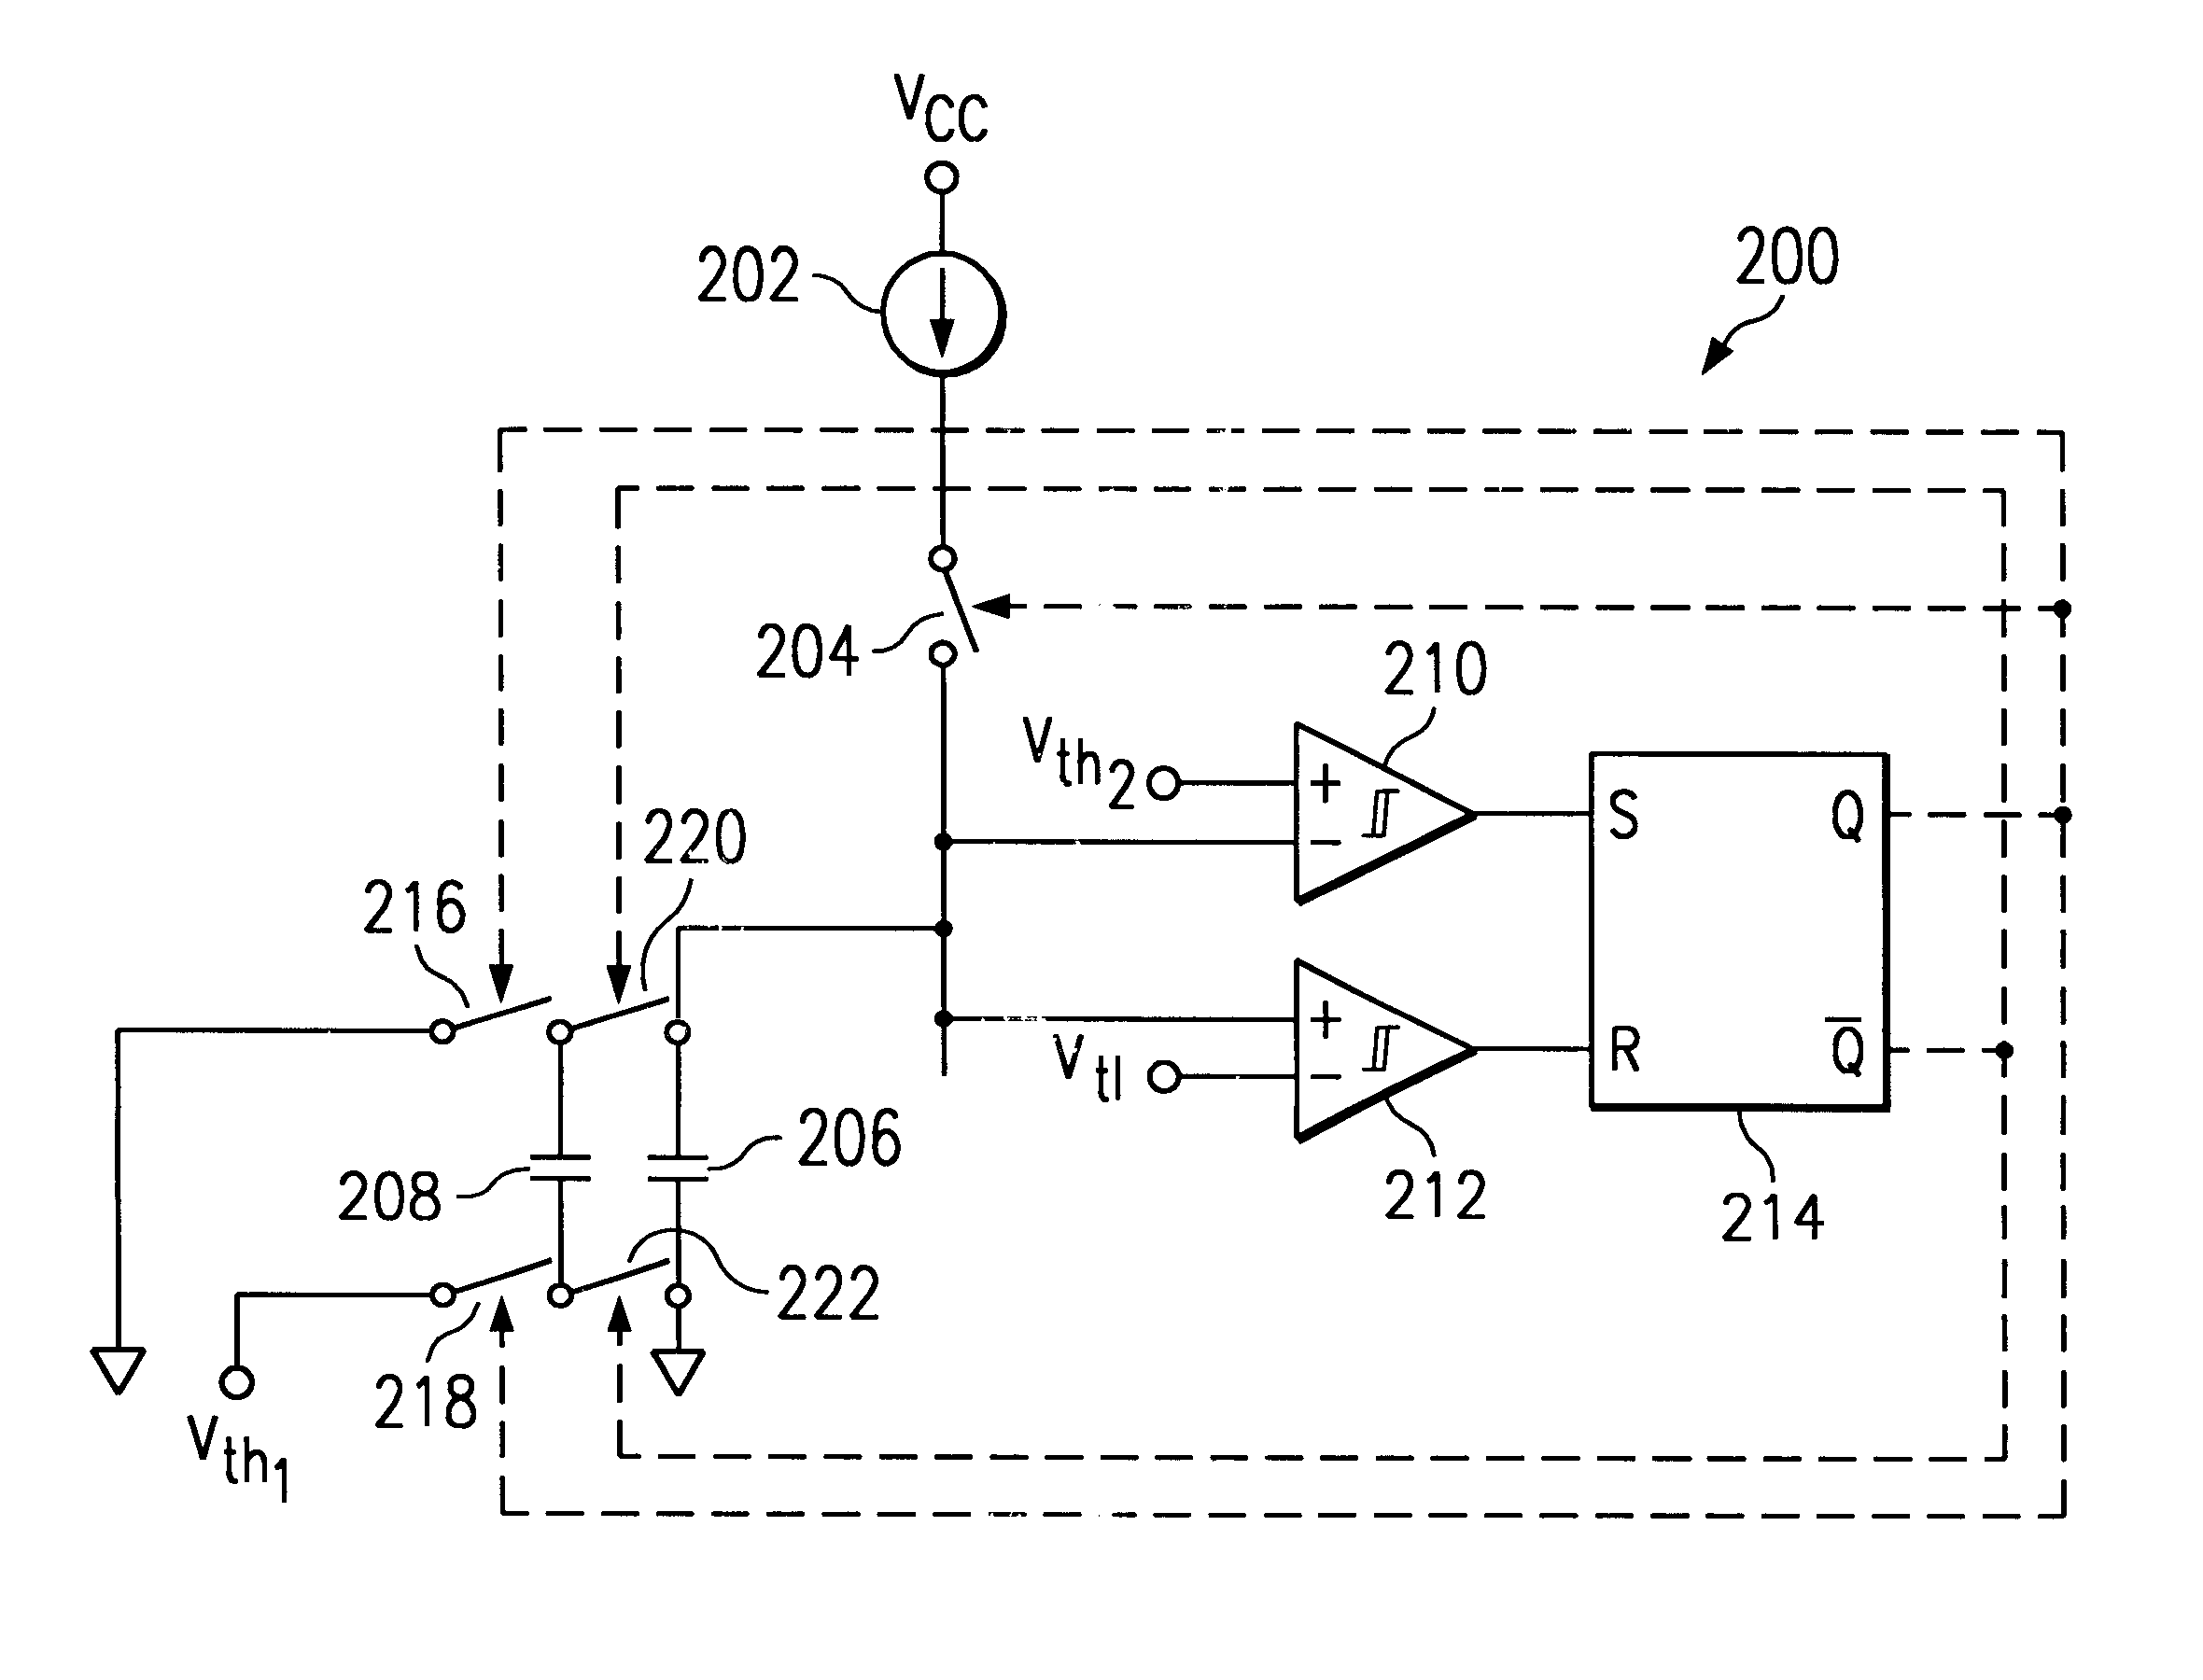 Oscillator circuit having an improved capacitor discharge circuit